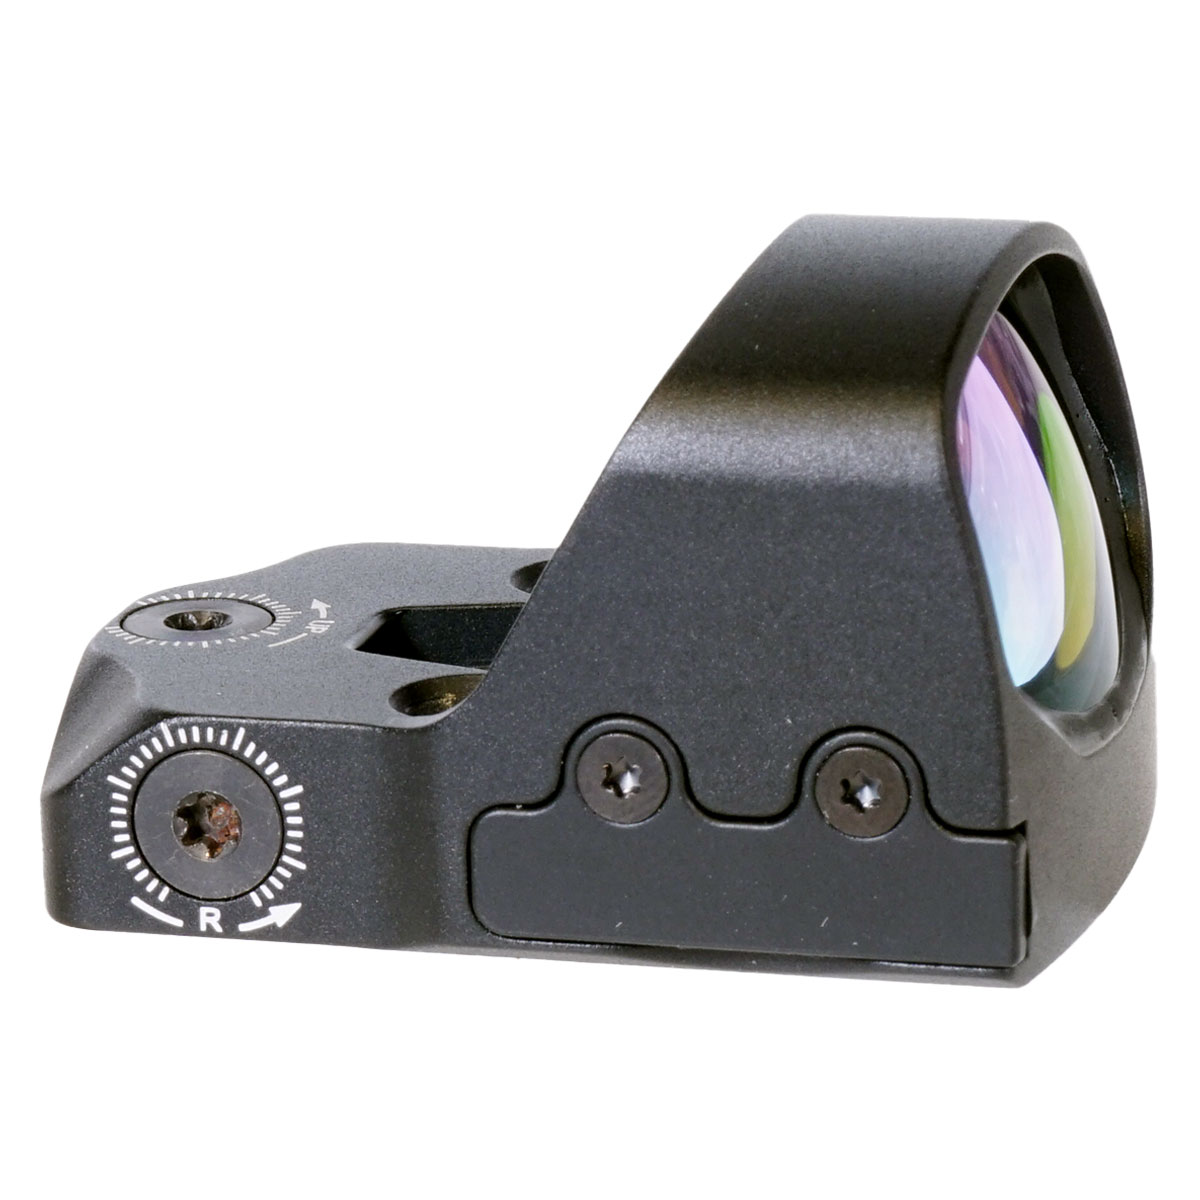 SHOTAC Heavy Duty Micro Red Dot Sight